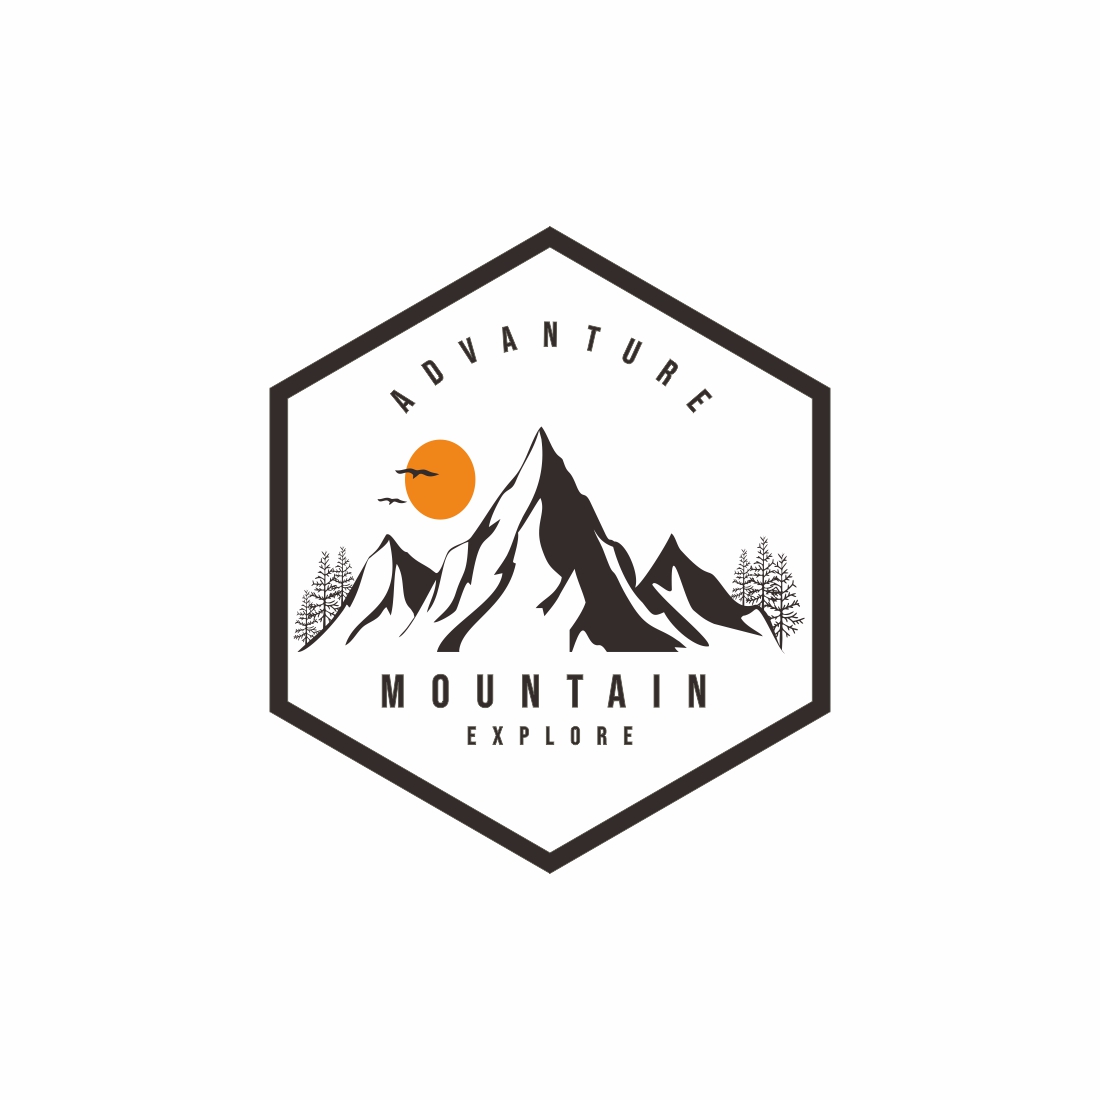 vector mountain and outdoor adventures logo ONLLY 12$ preview image.